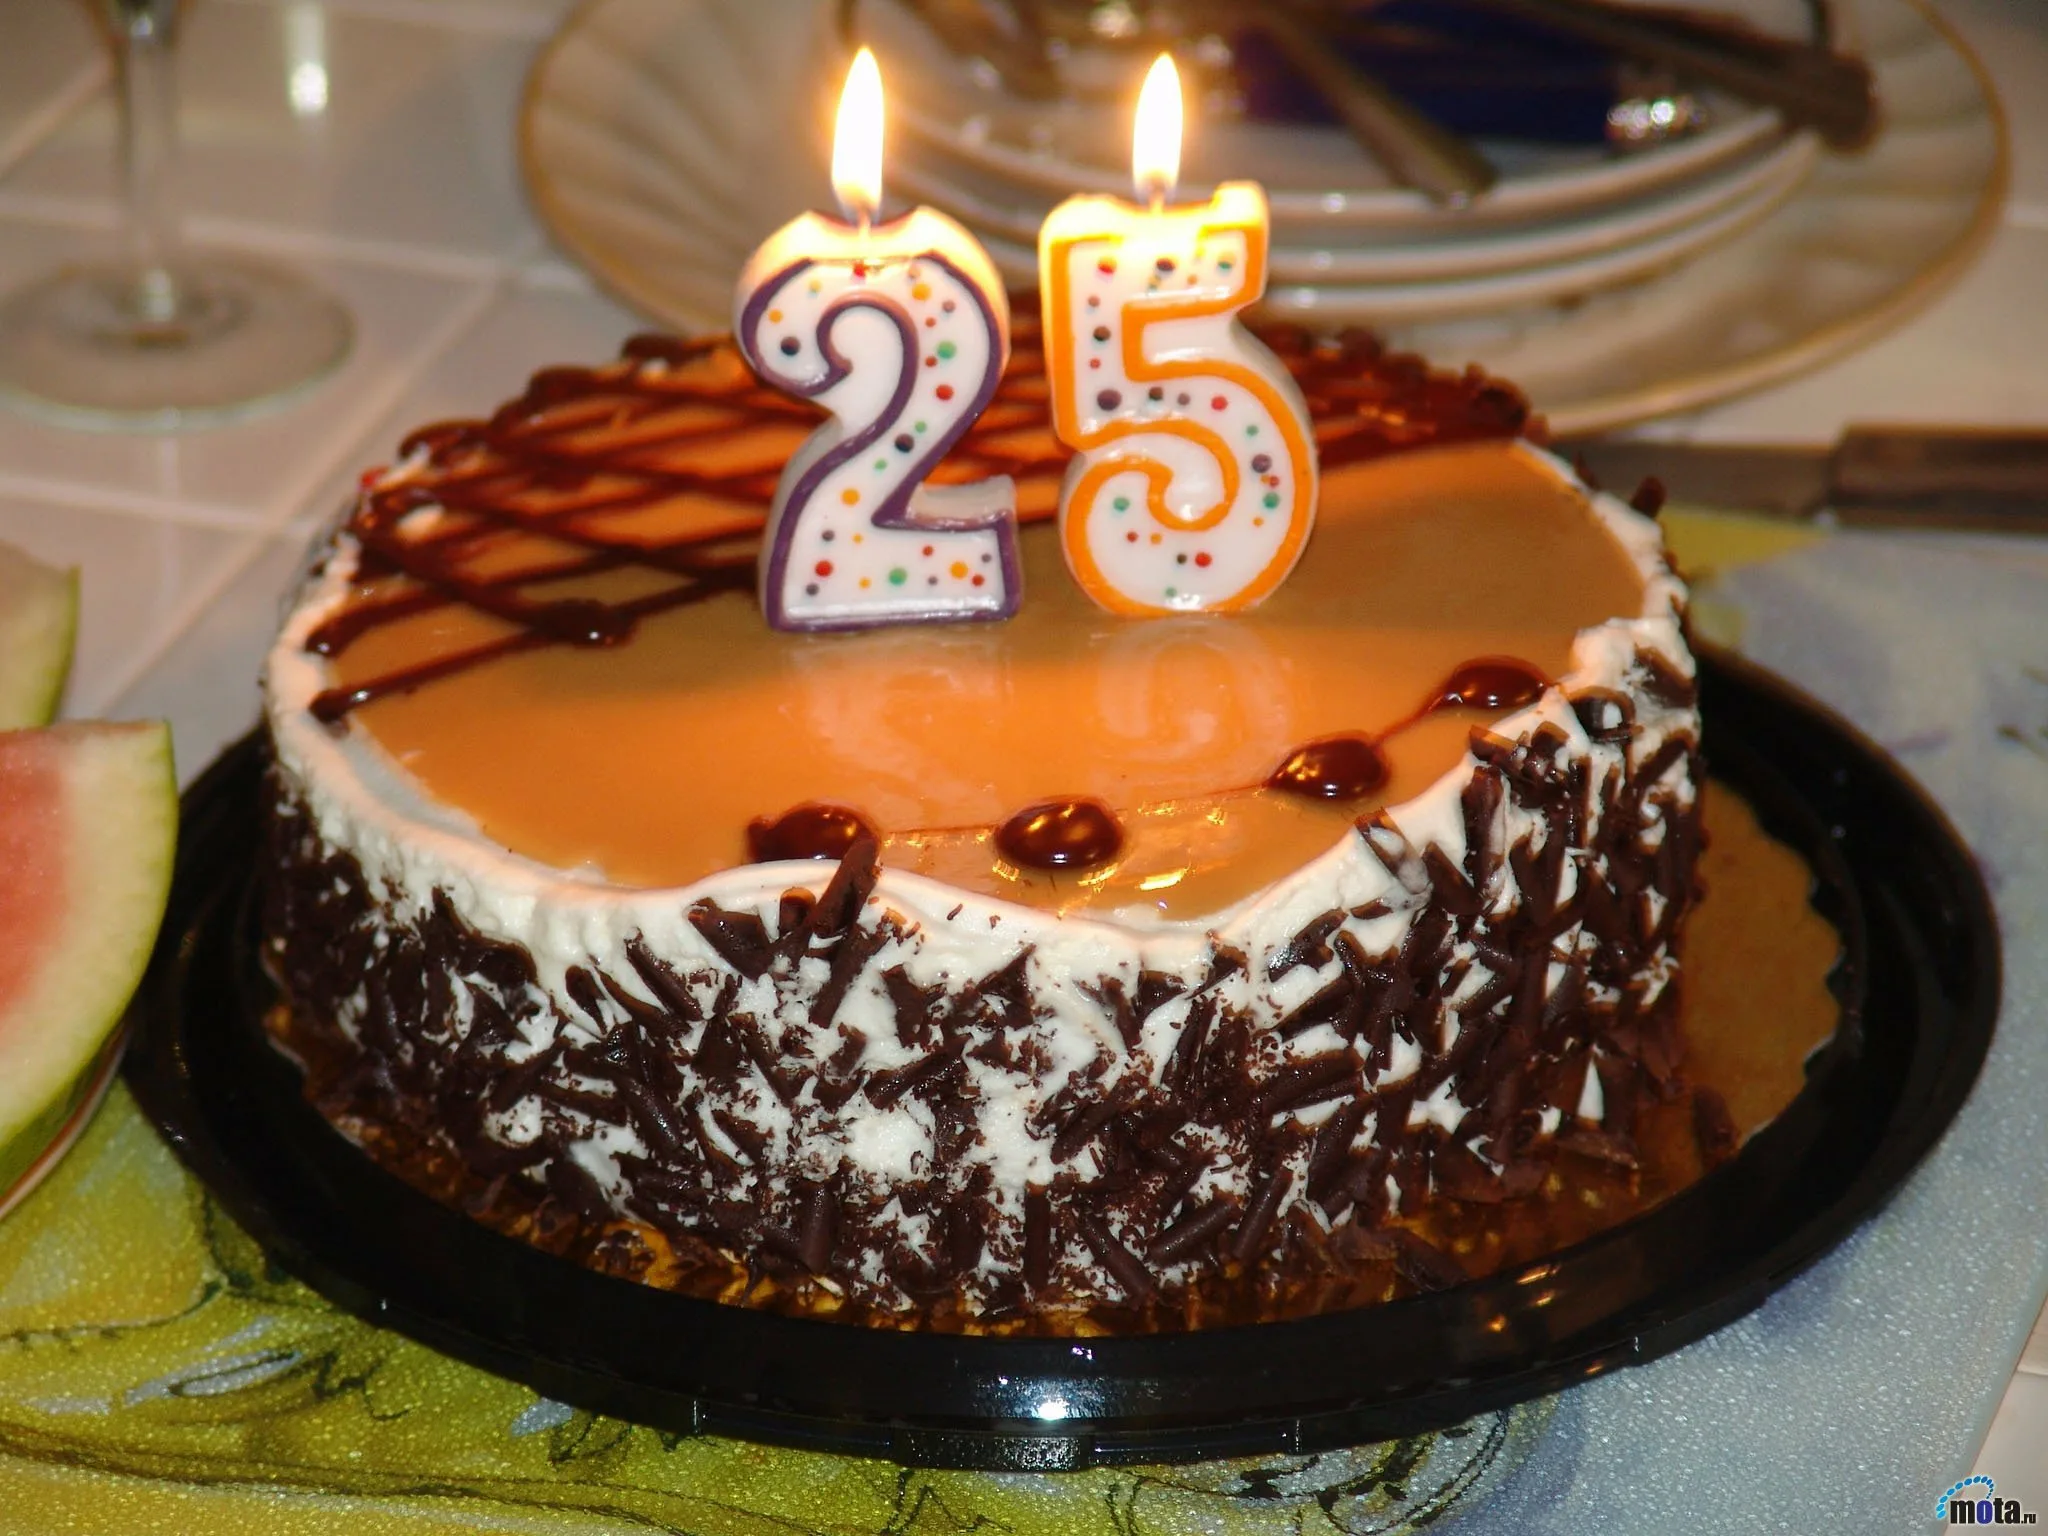 44 года поздравить. Торт с днем рождения!. С днем рождения 25. Торт с днём рождения картинки. Торт на юбилей.